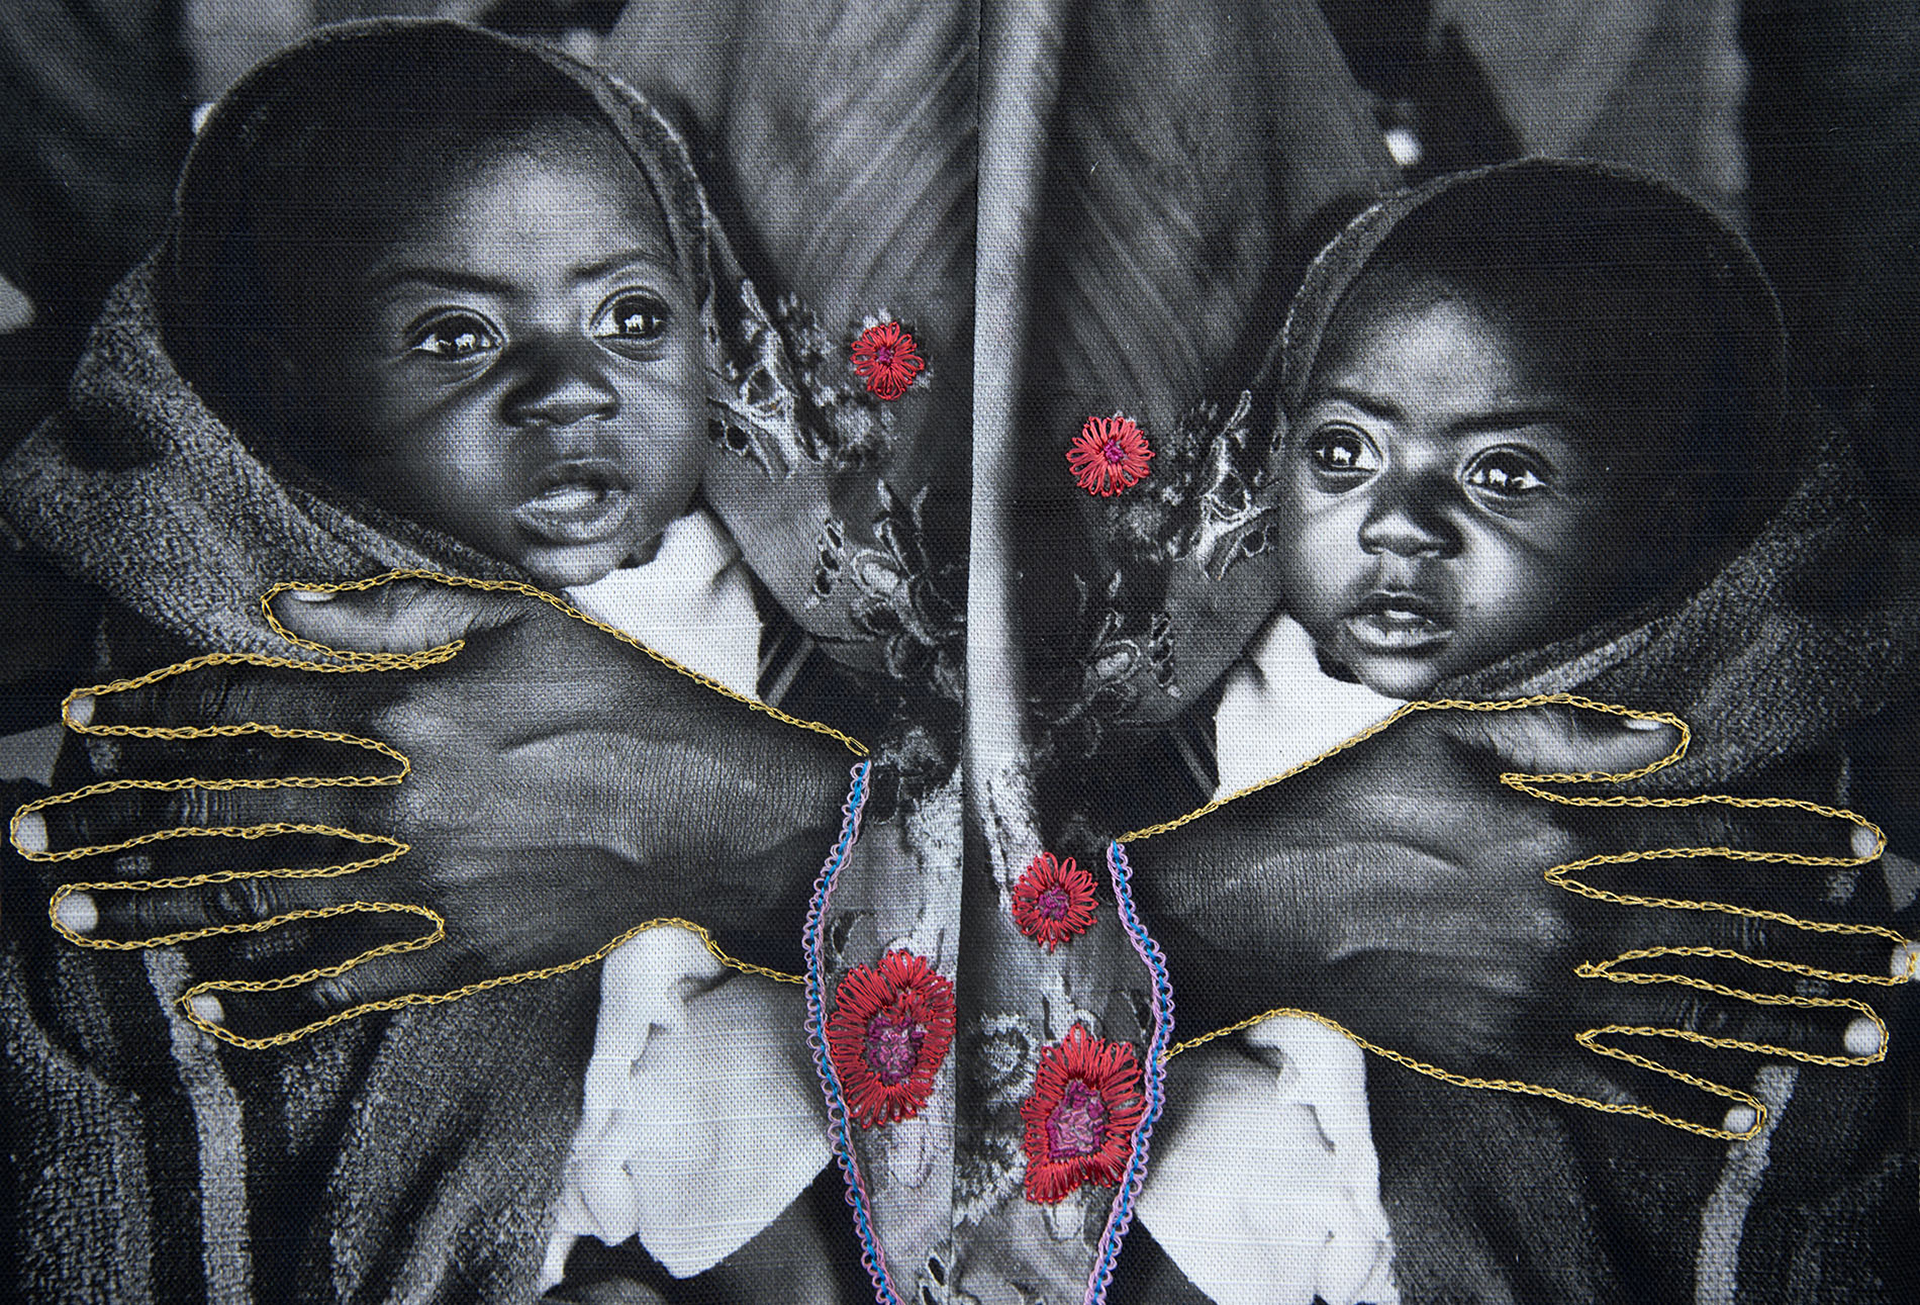 From the series 'Sudan at War', © Jenny Matthews